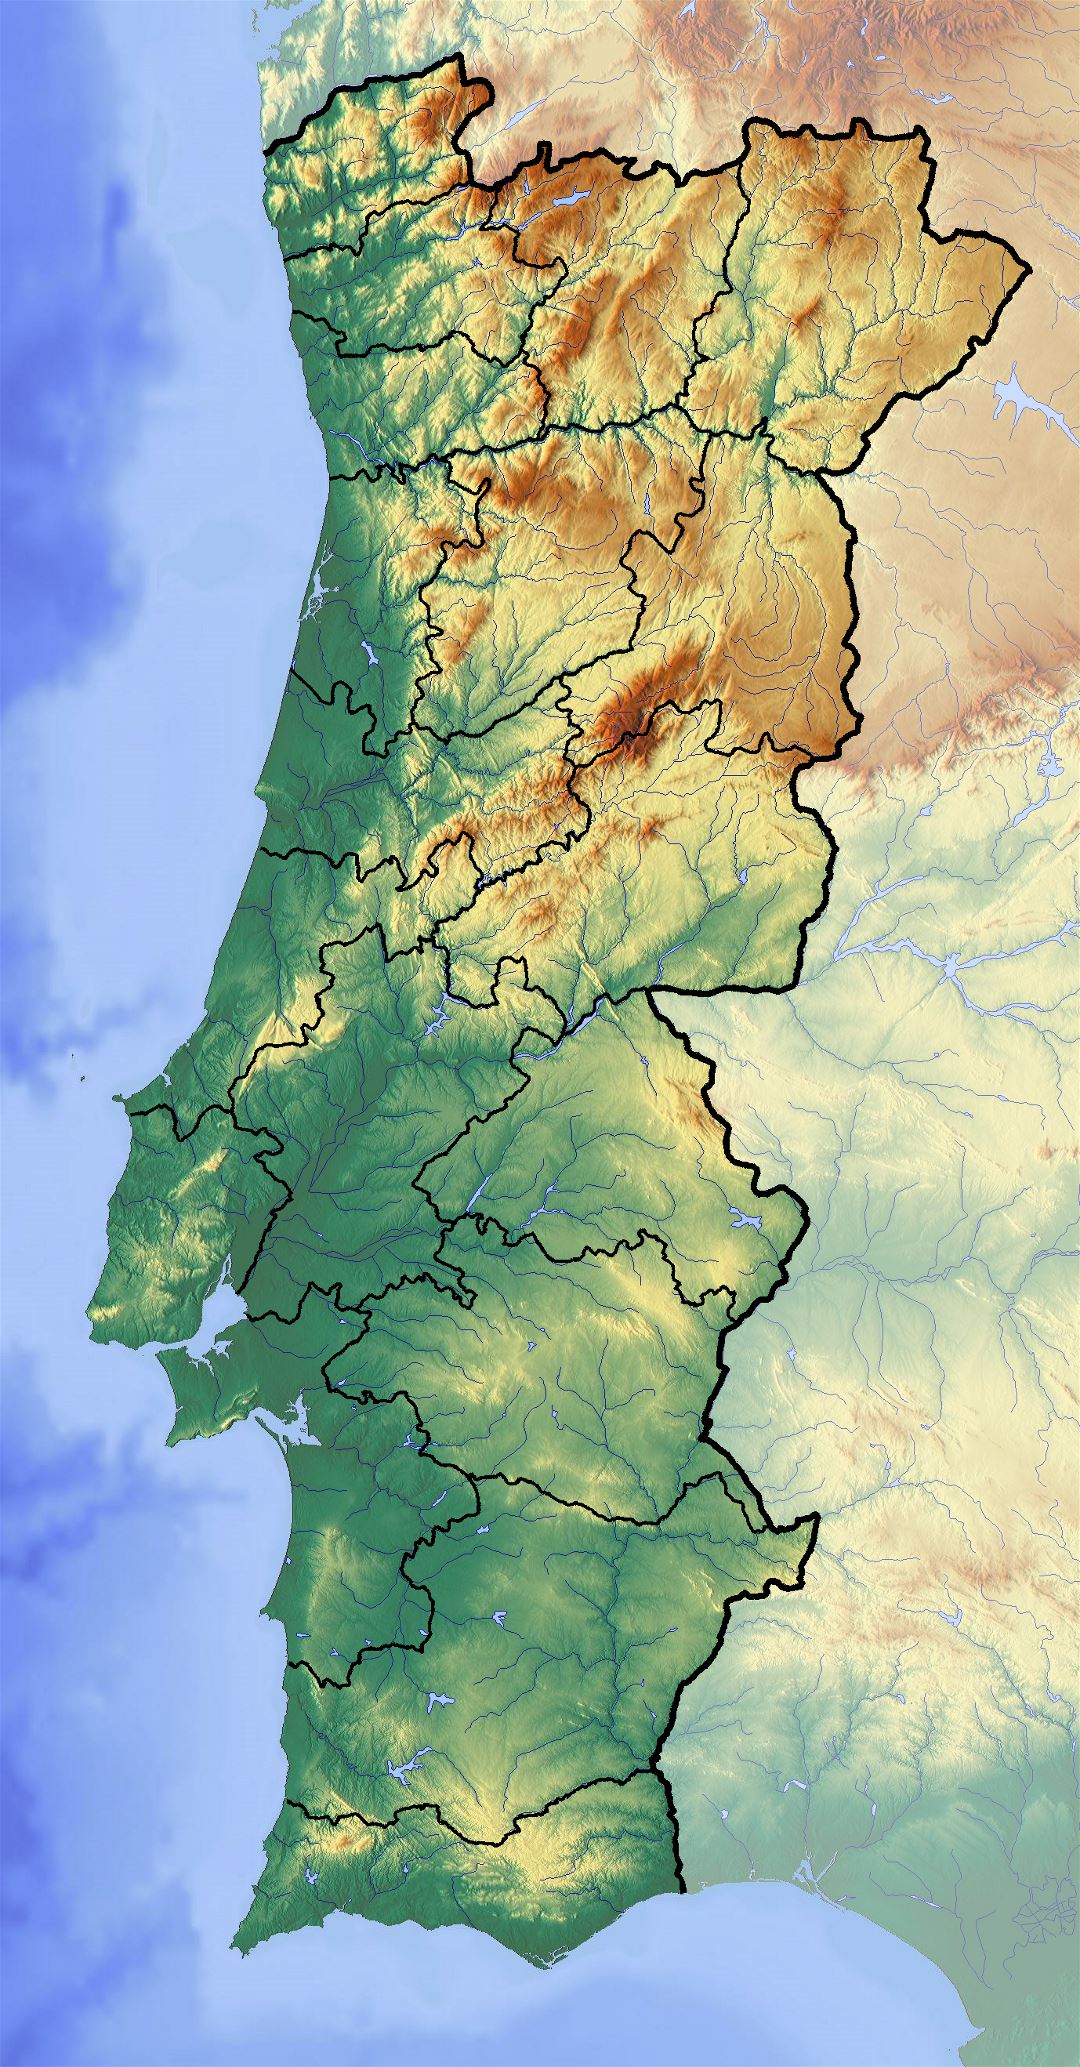 Grande detallado alivio mapa de Portugal